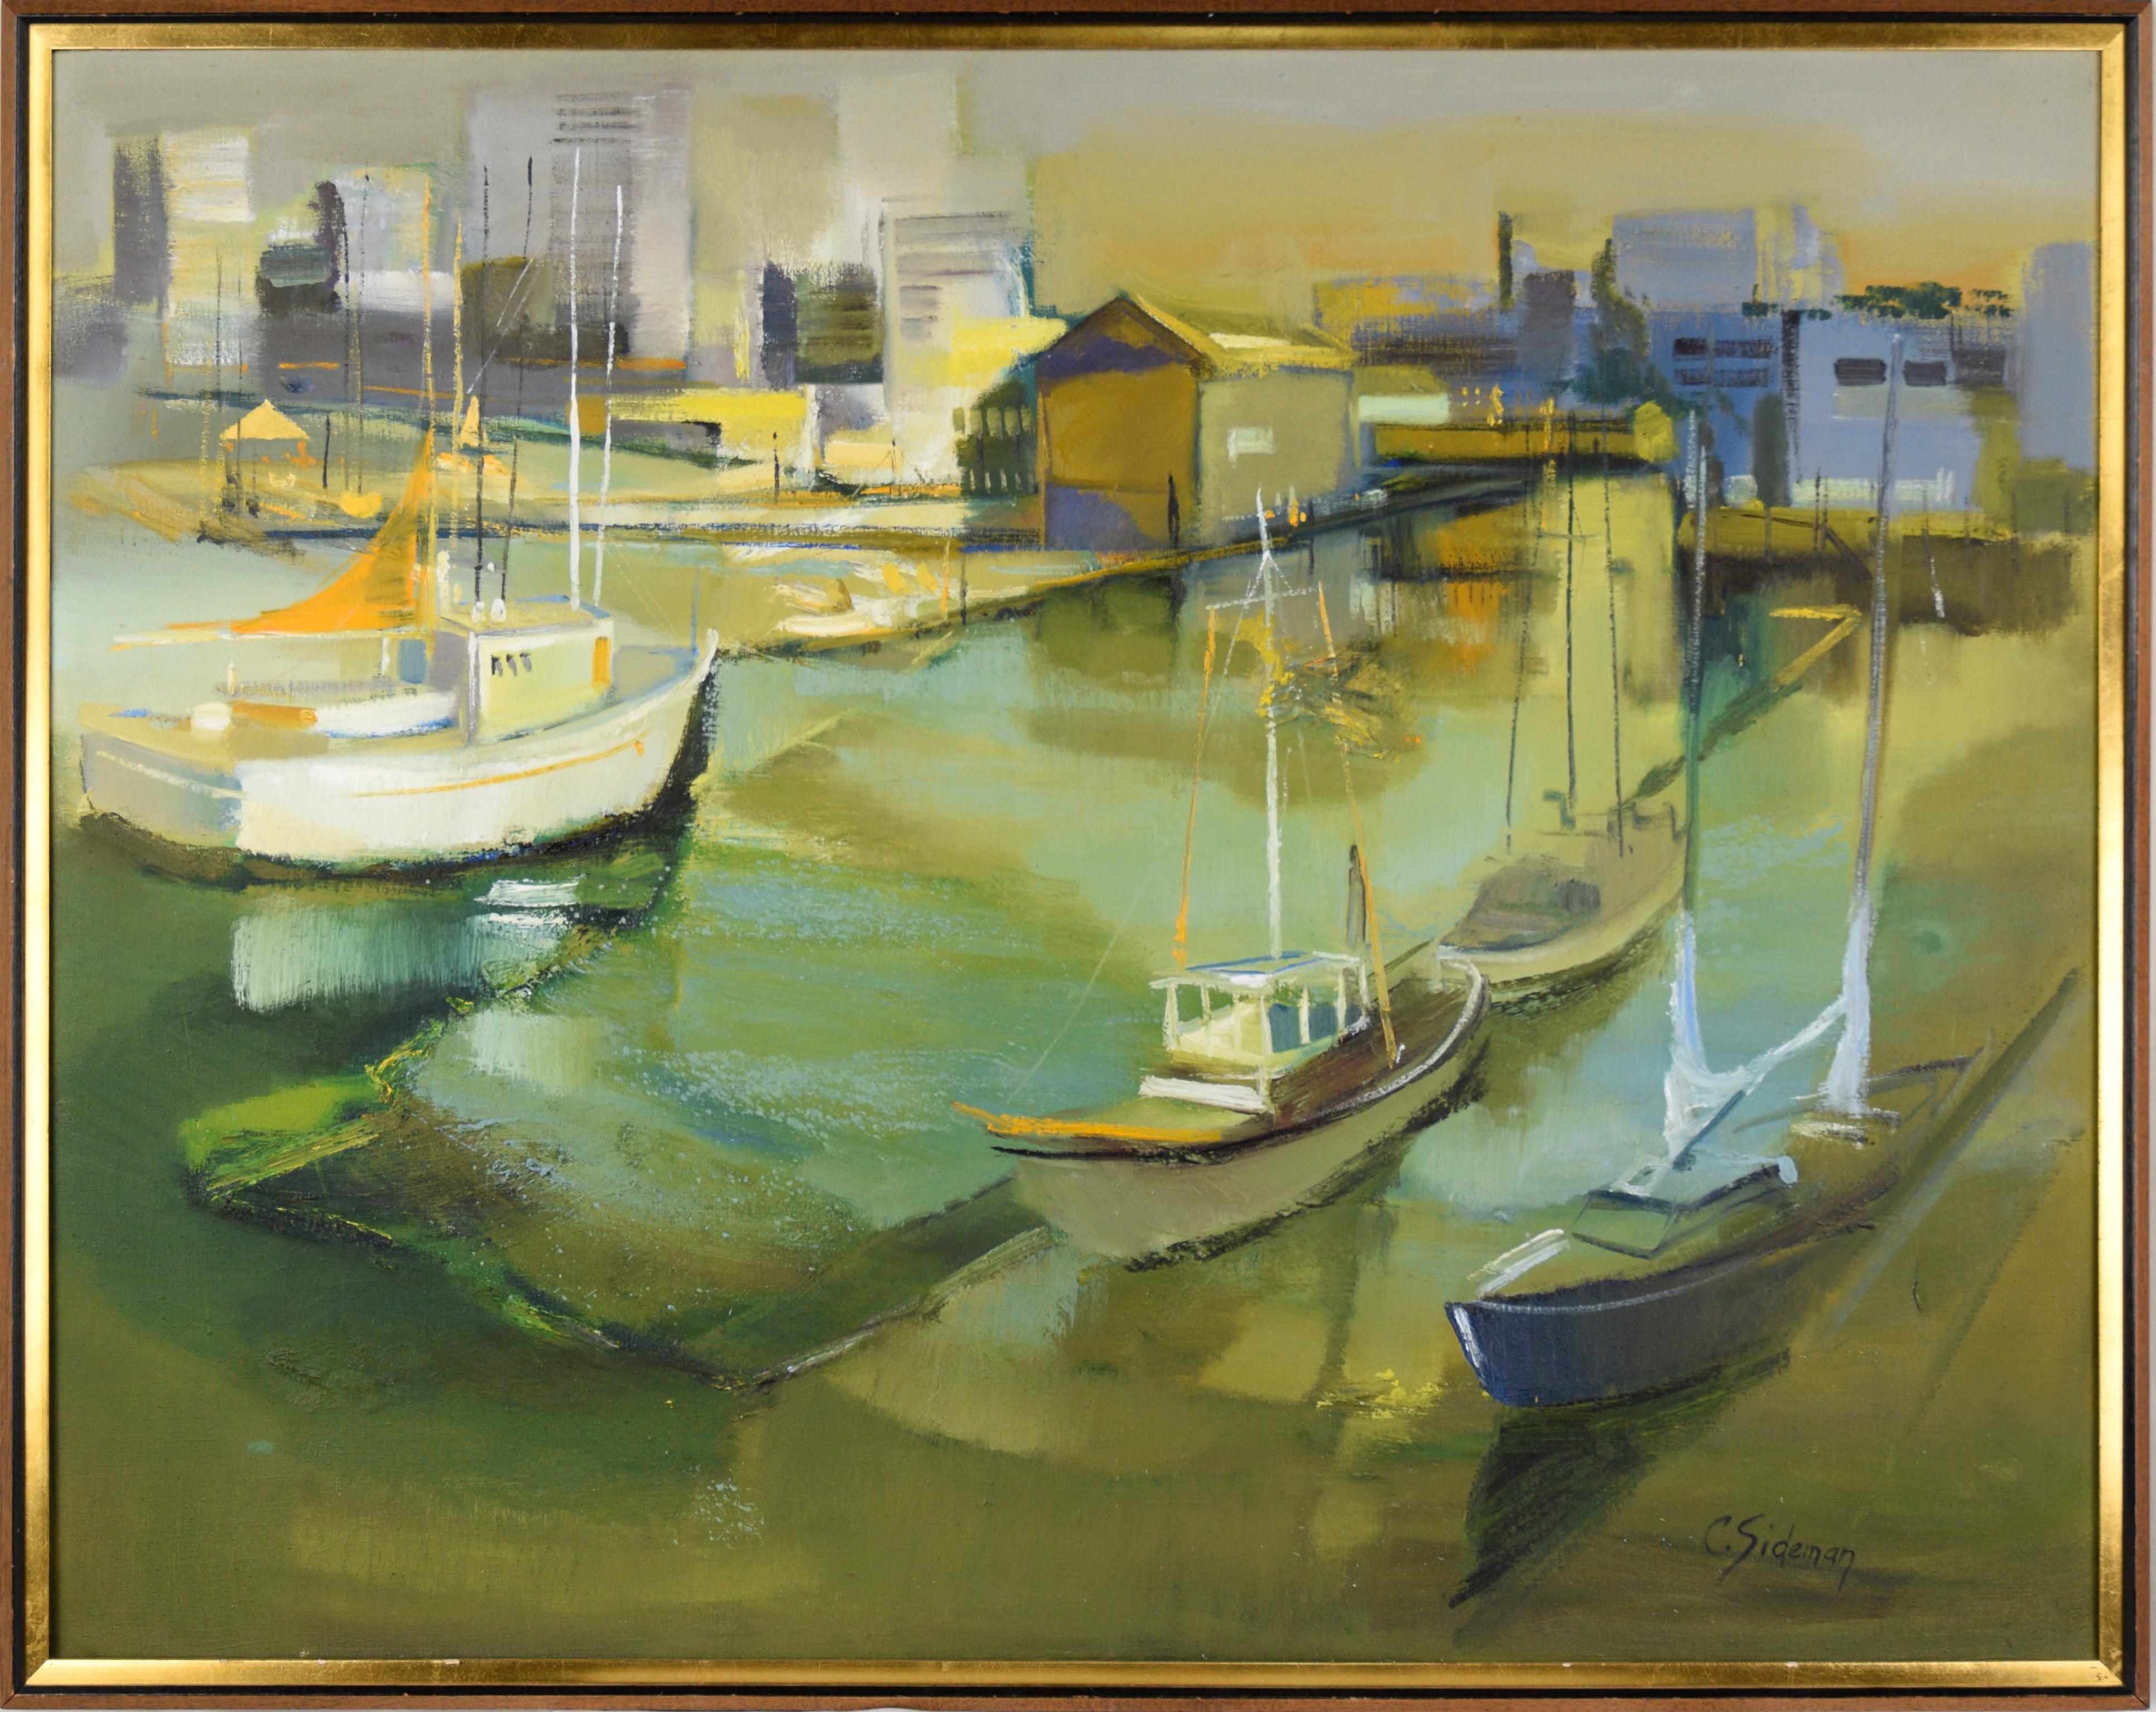 Carol Sideman Landscape Painting - "City Harbor" Mid Century Modern Oakland Seascape in Oil on Linen